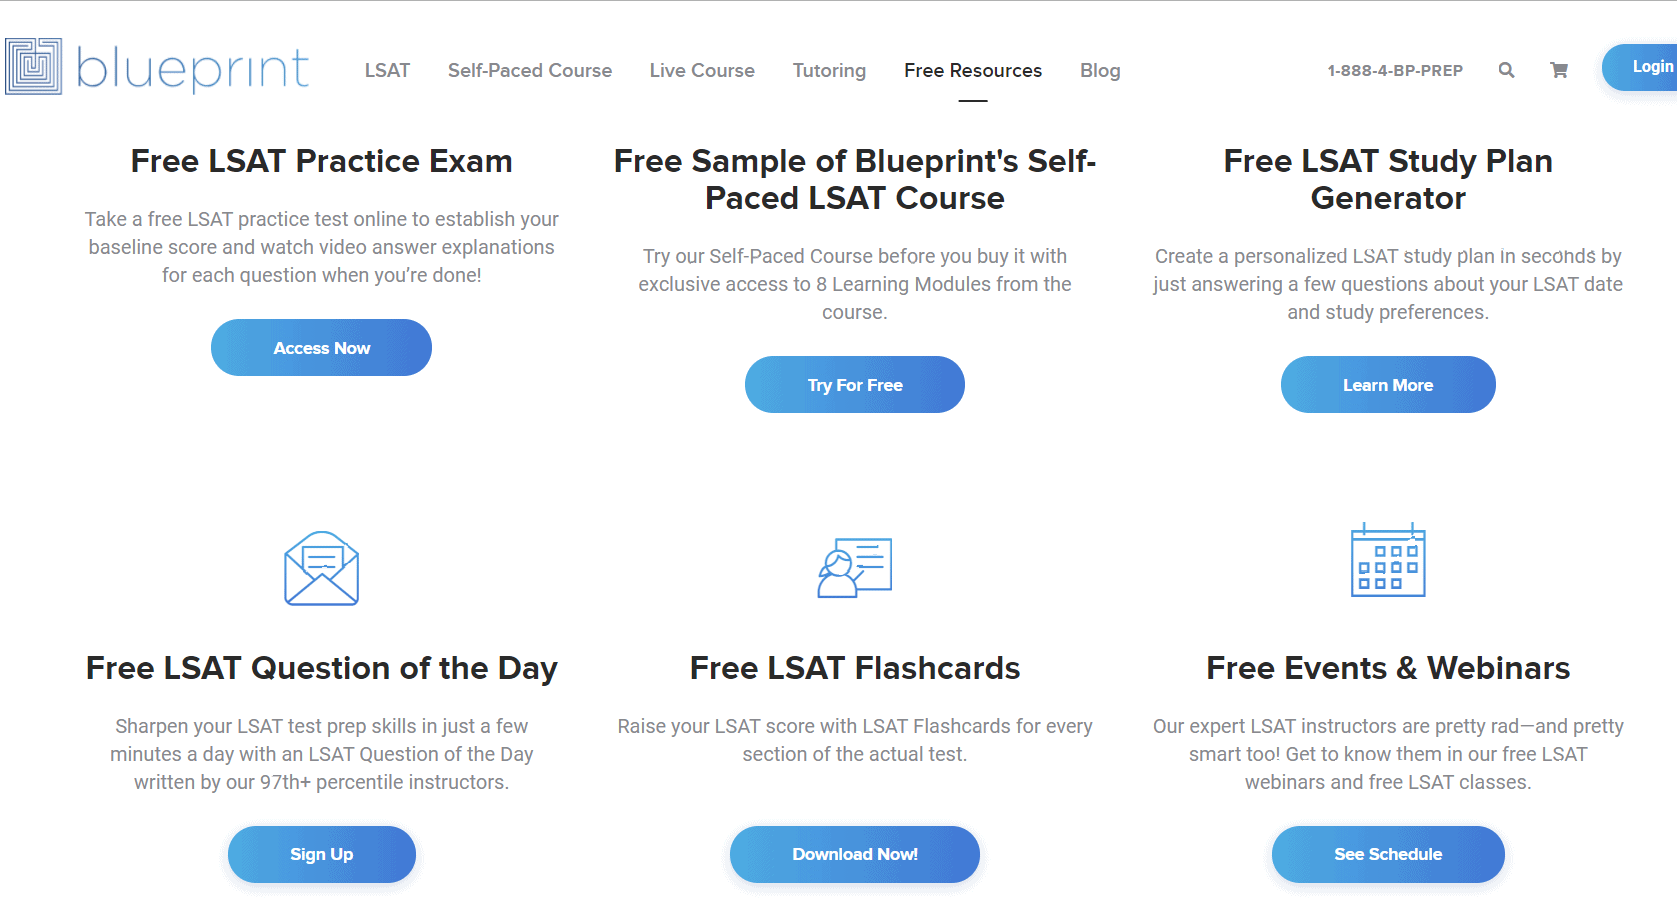 Pricing - Blueprint LSAT 